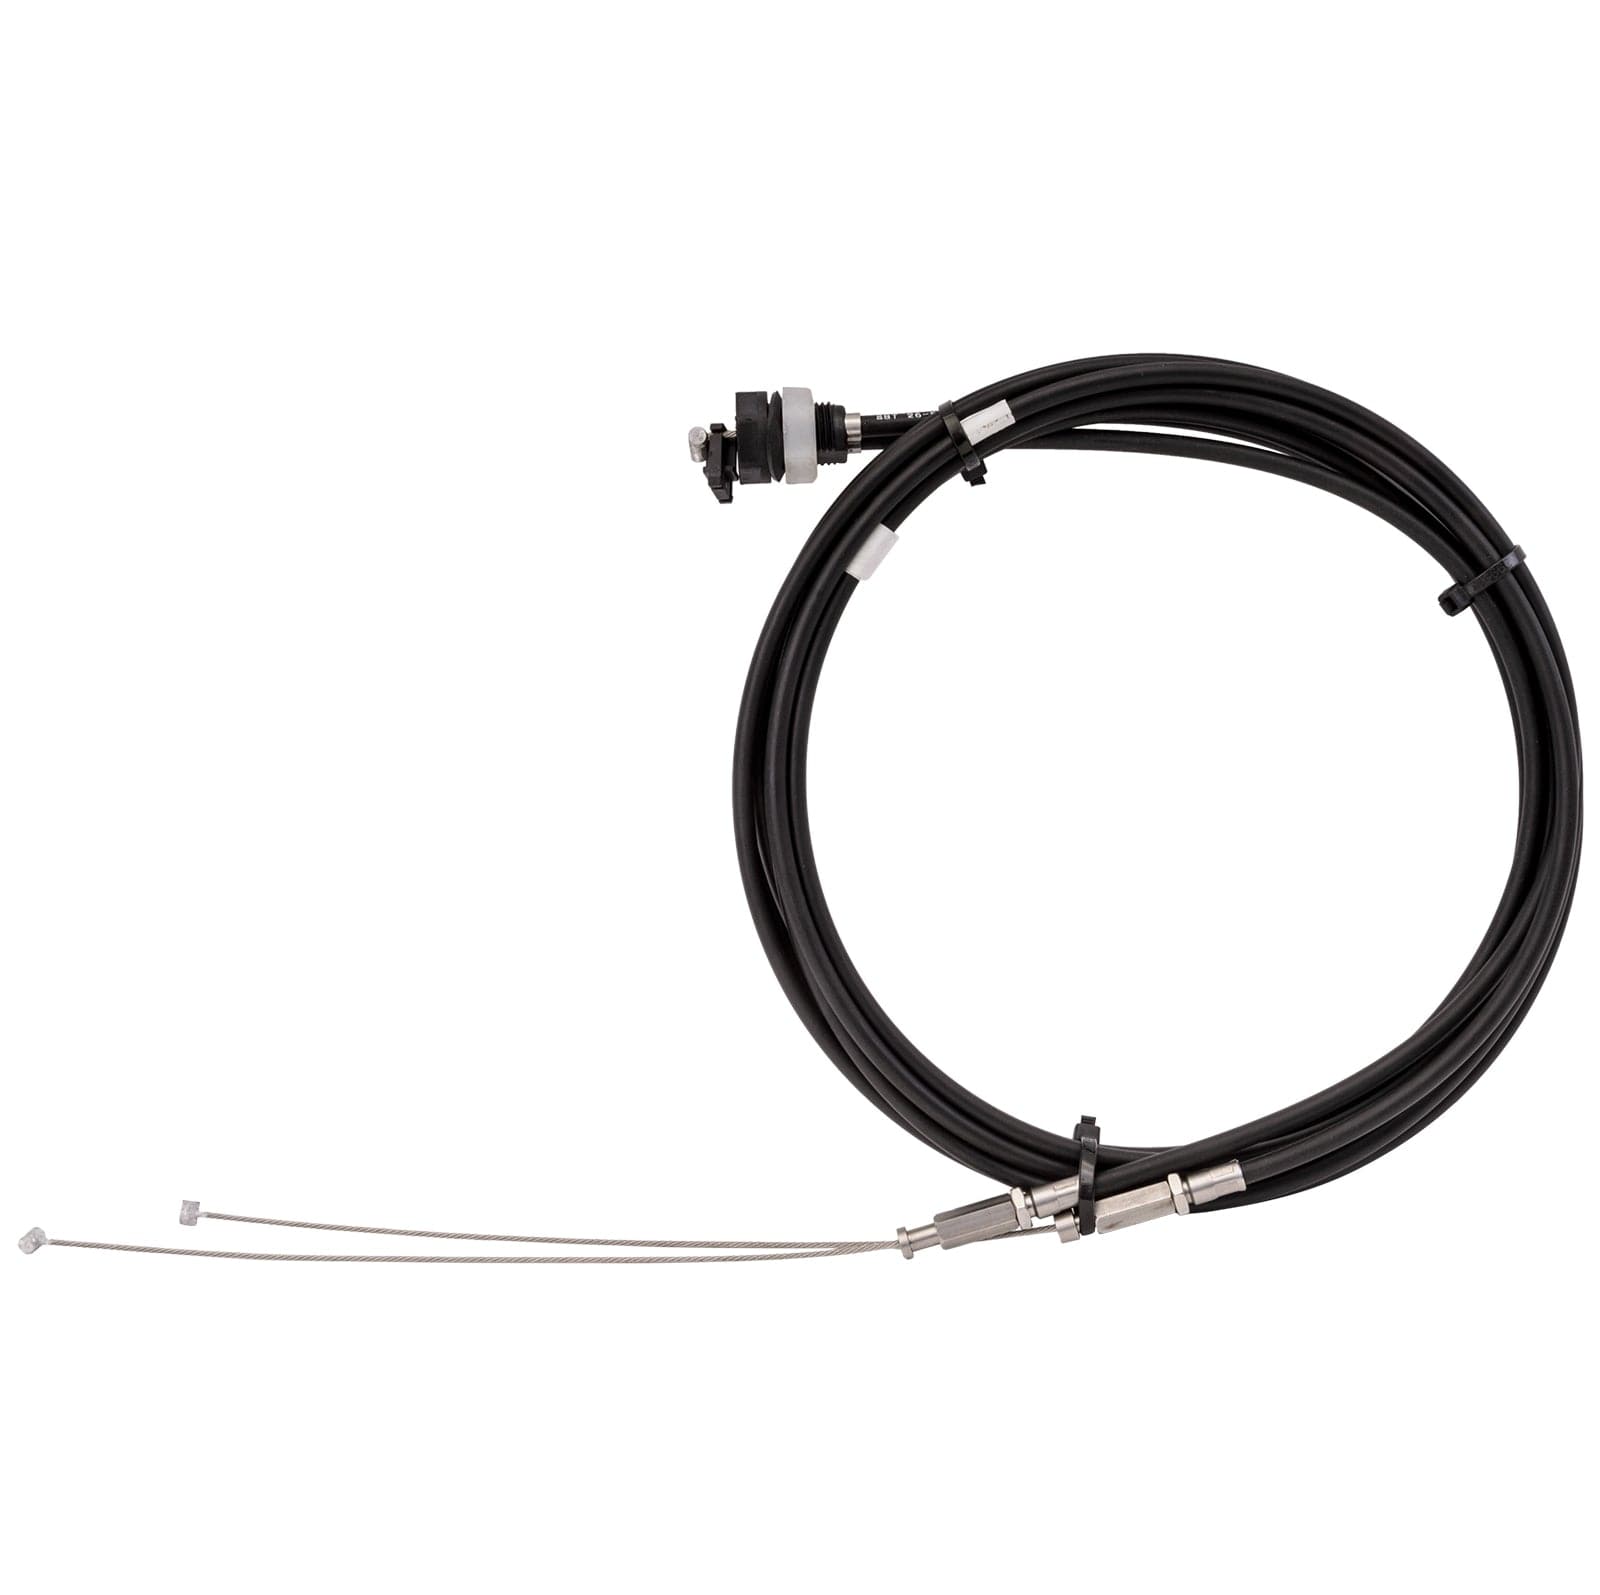 SBT new Yamaha Trim Cable fits F2S-6153E-00-00 1.8L